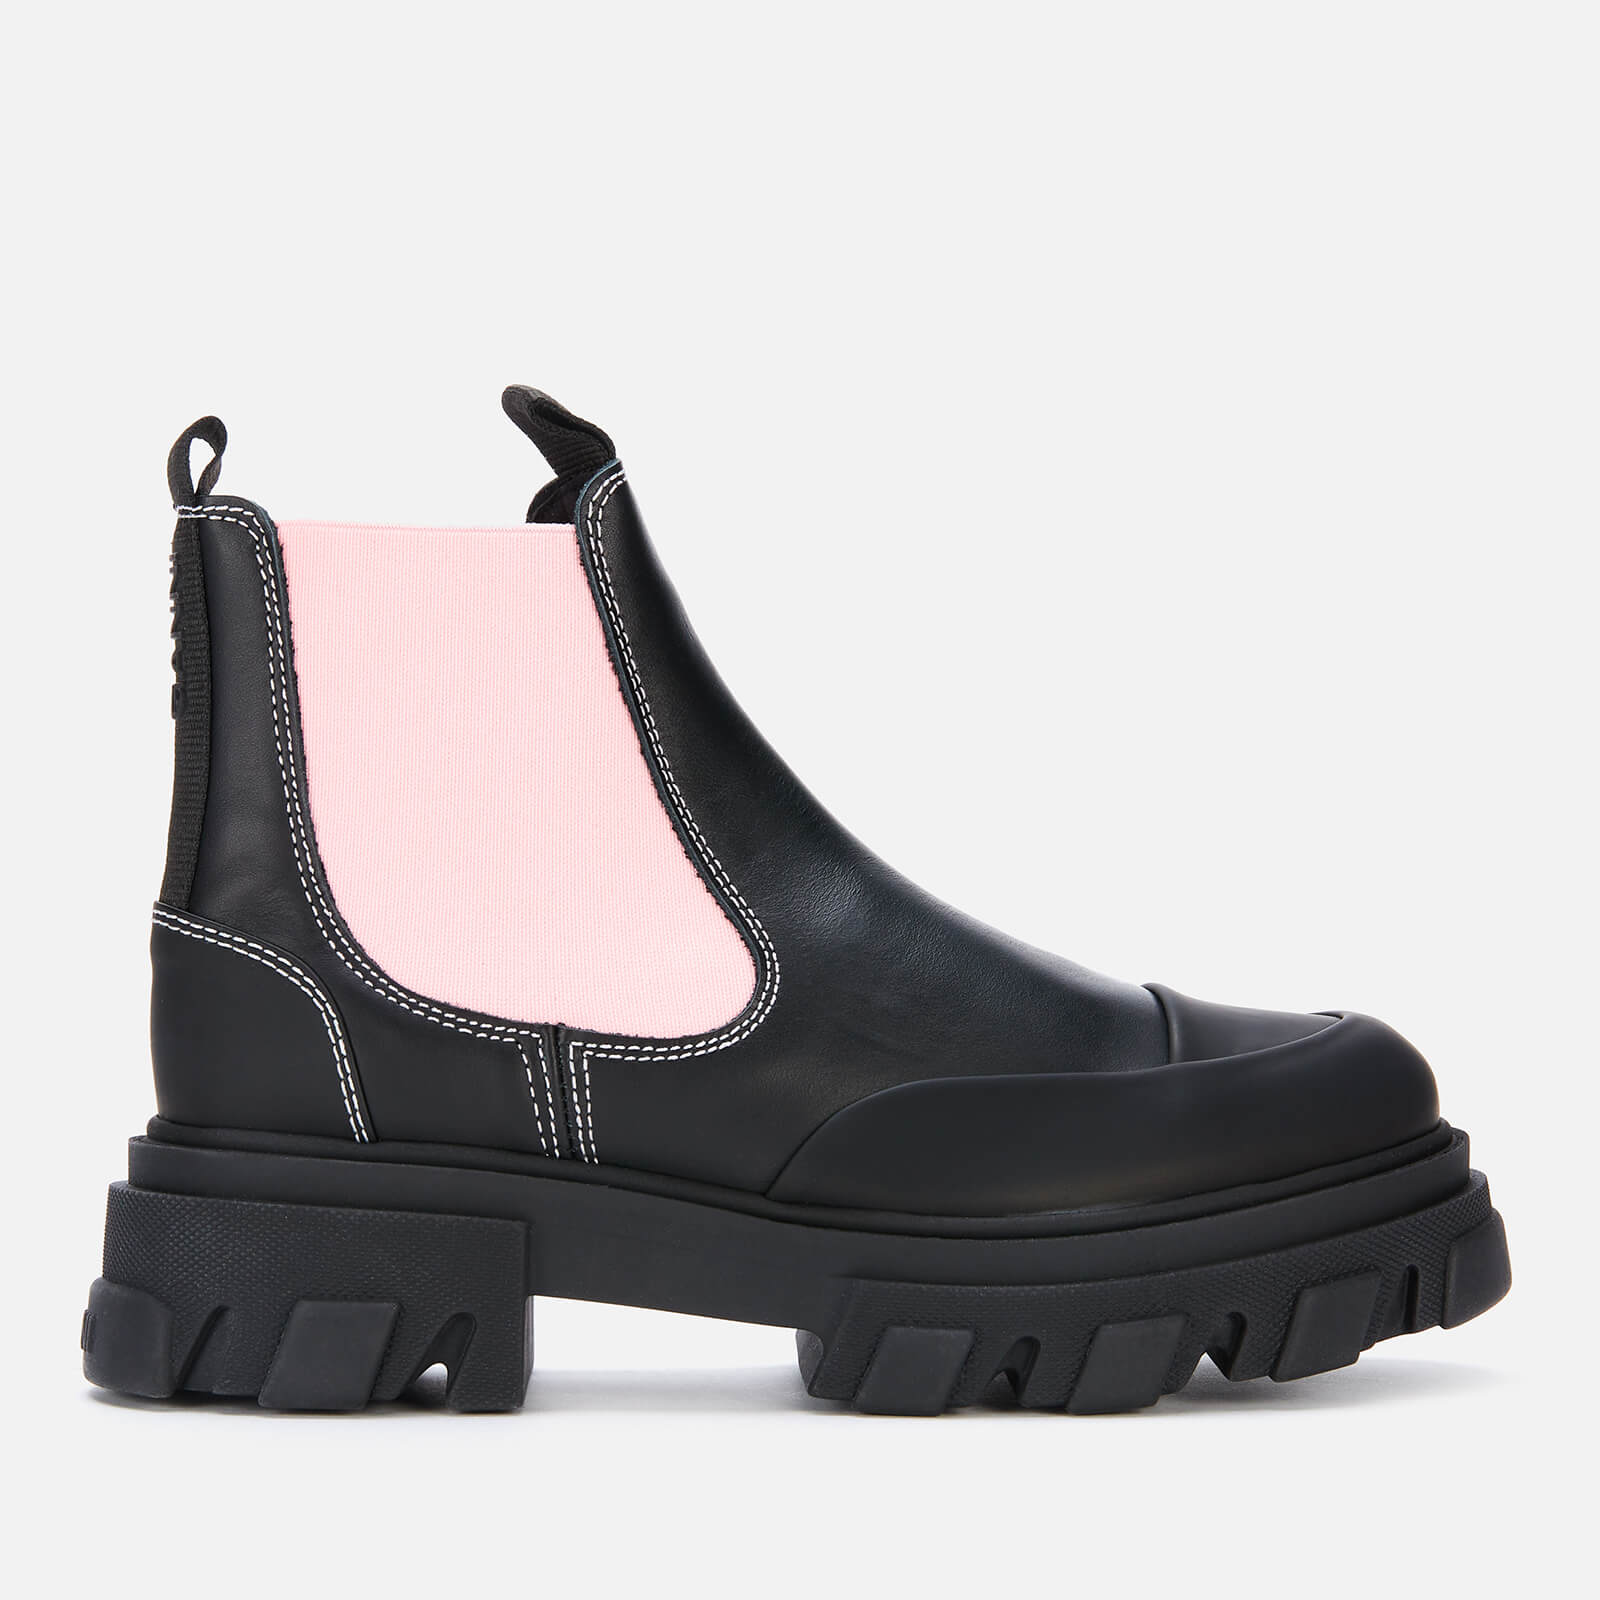 Ganni Women's Leather Chelsea Boots - Black/Pink - UK 3